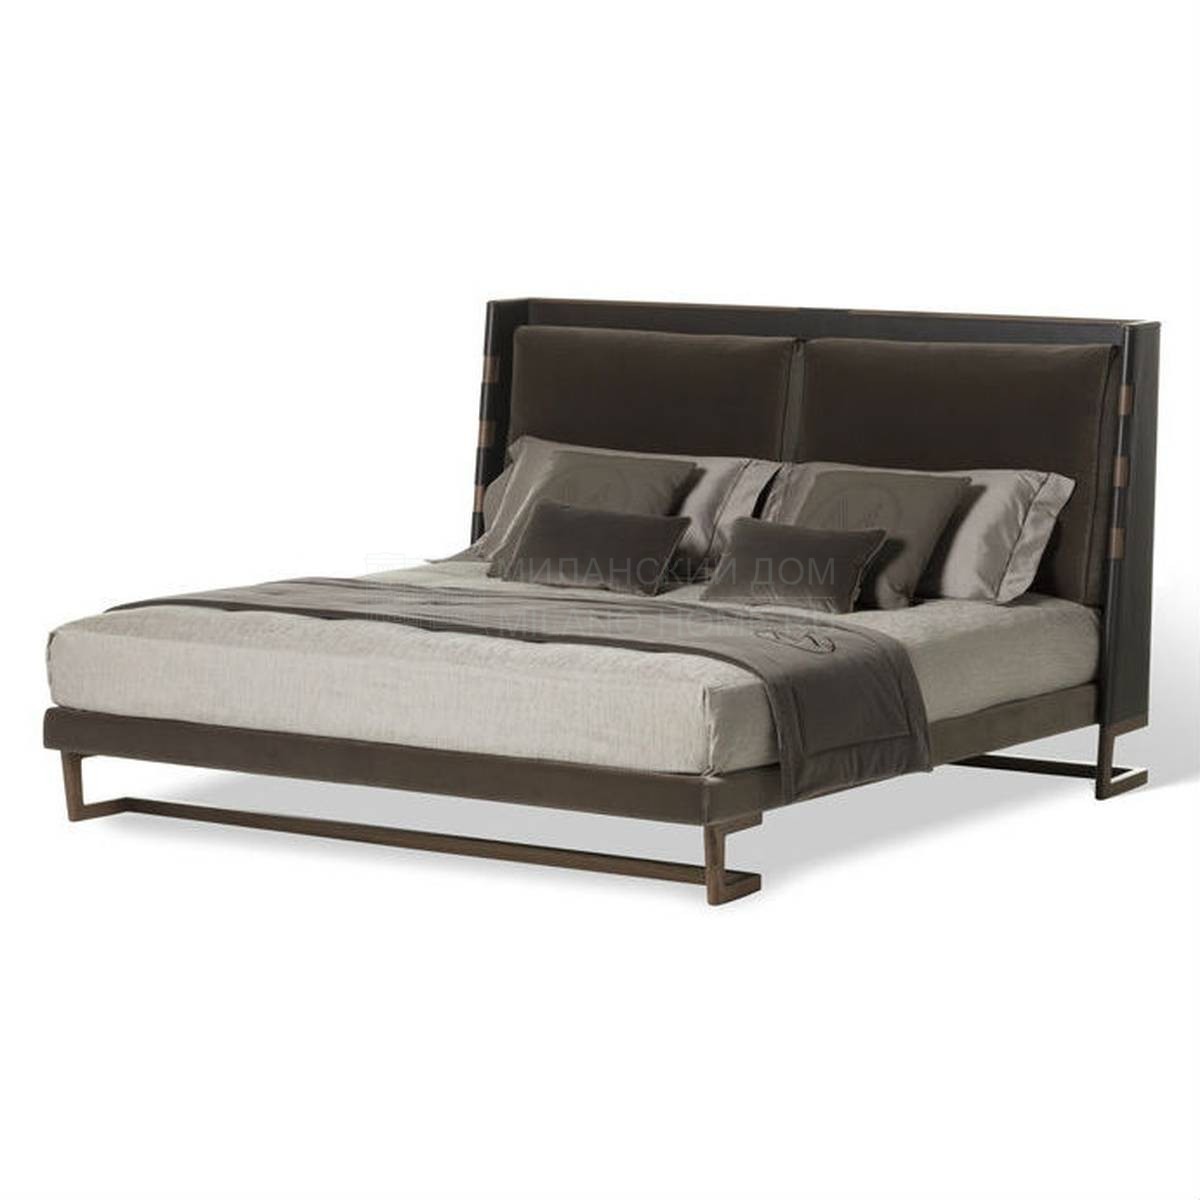 Кровать с мягким изголовьем Wild bed из Италии фабрики MEDEA (Life style)